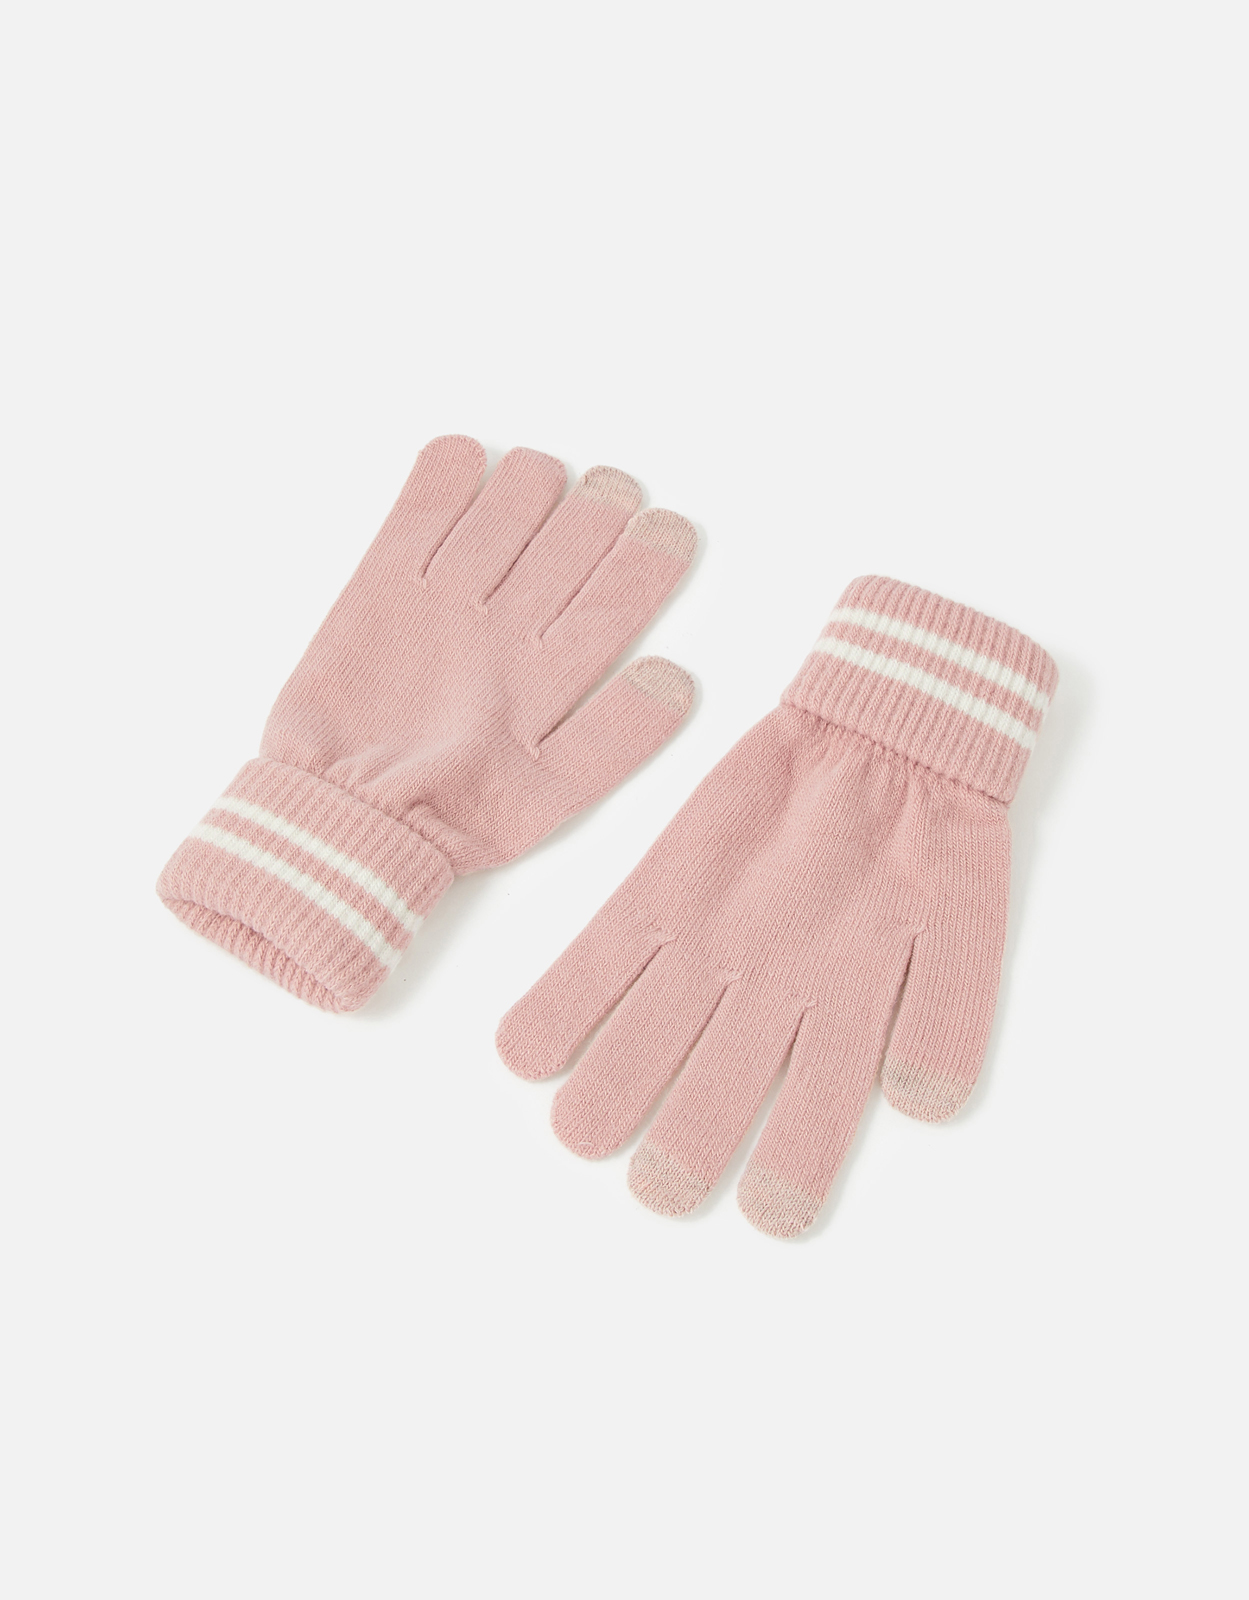 Accessorize Women's Varsity Stripe Touchscreen Gloves Pink, Size: One Size